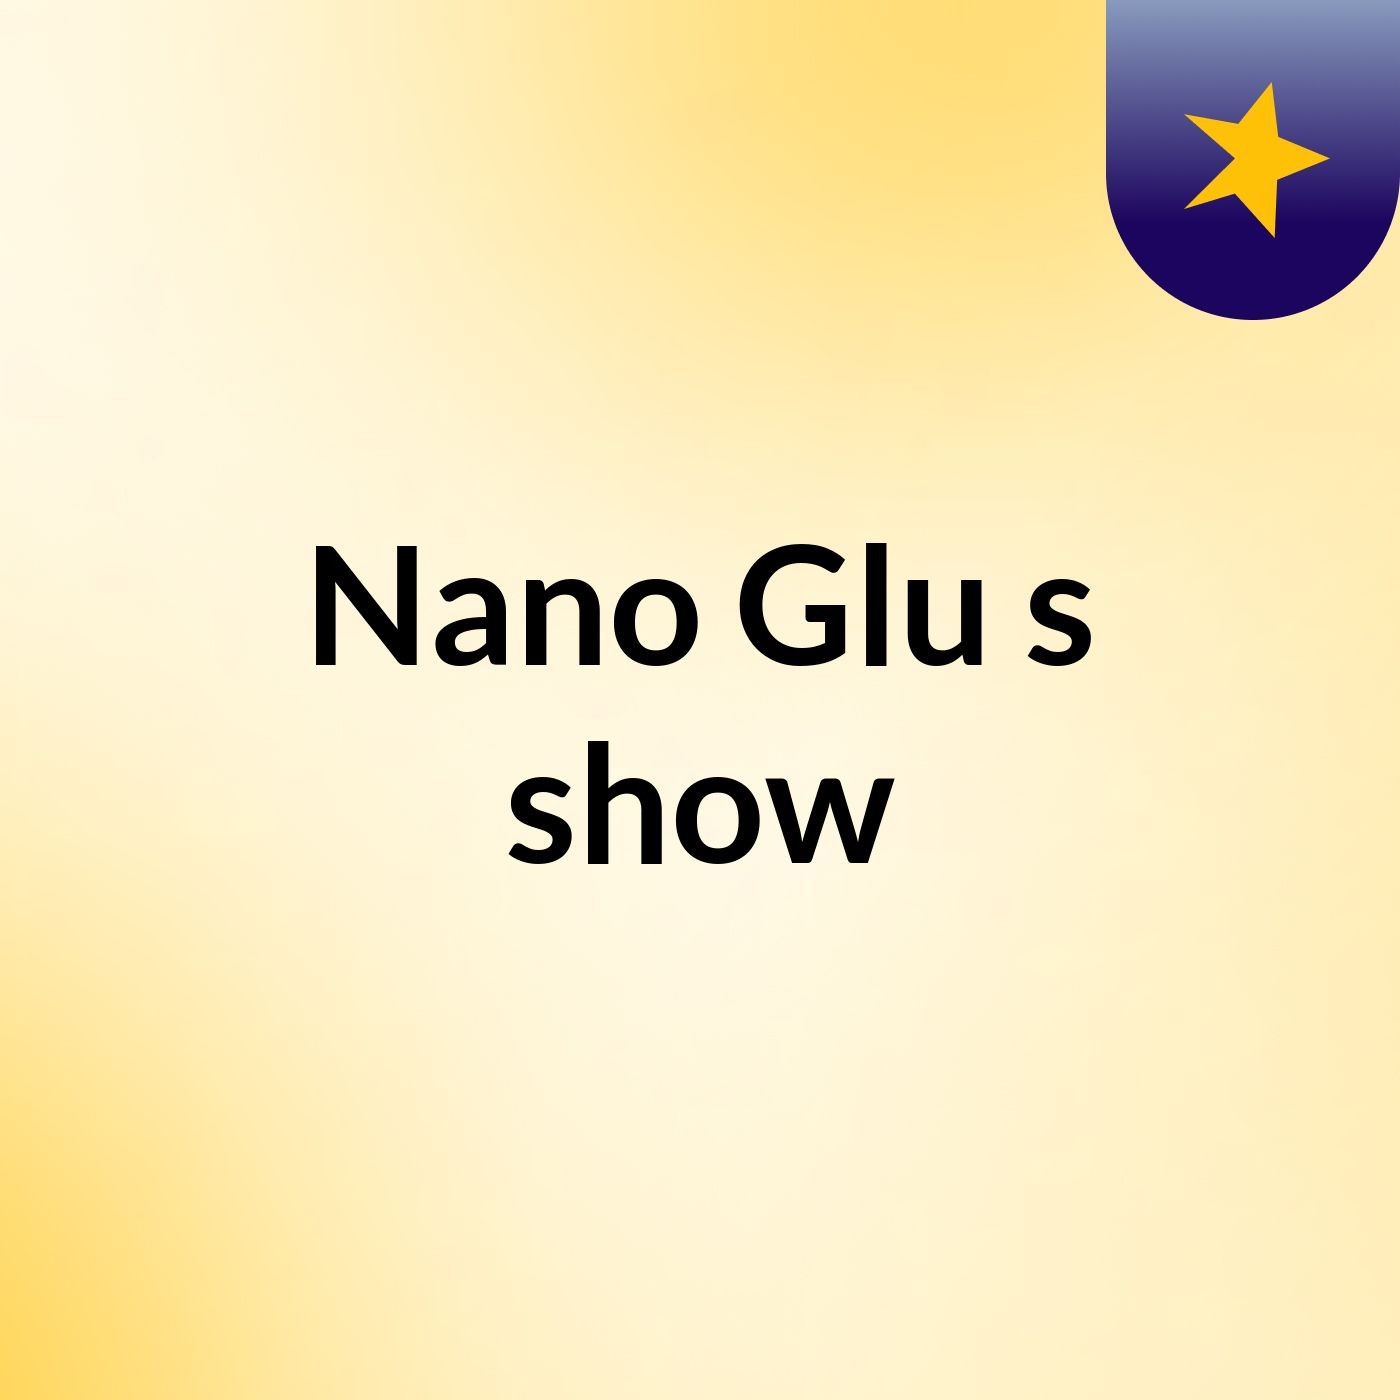 Nano Glu's show